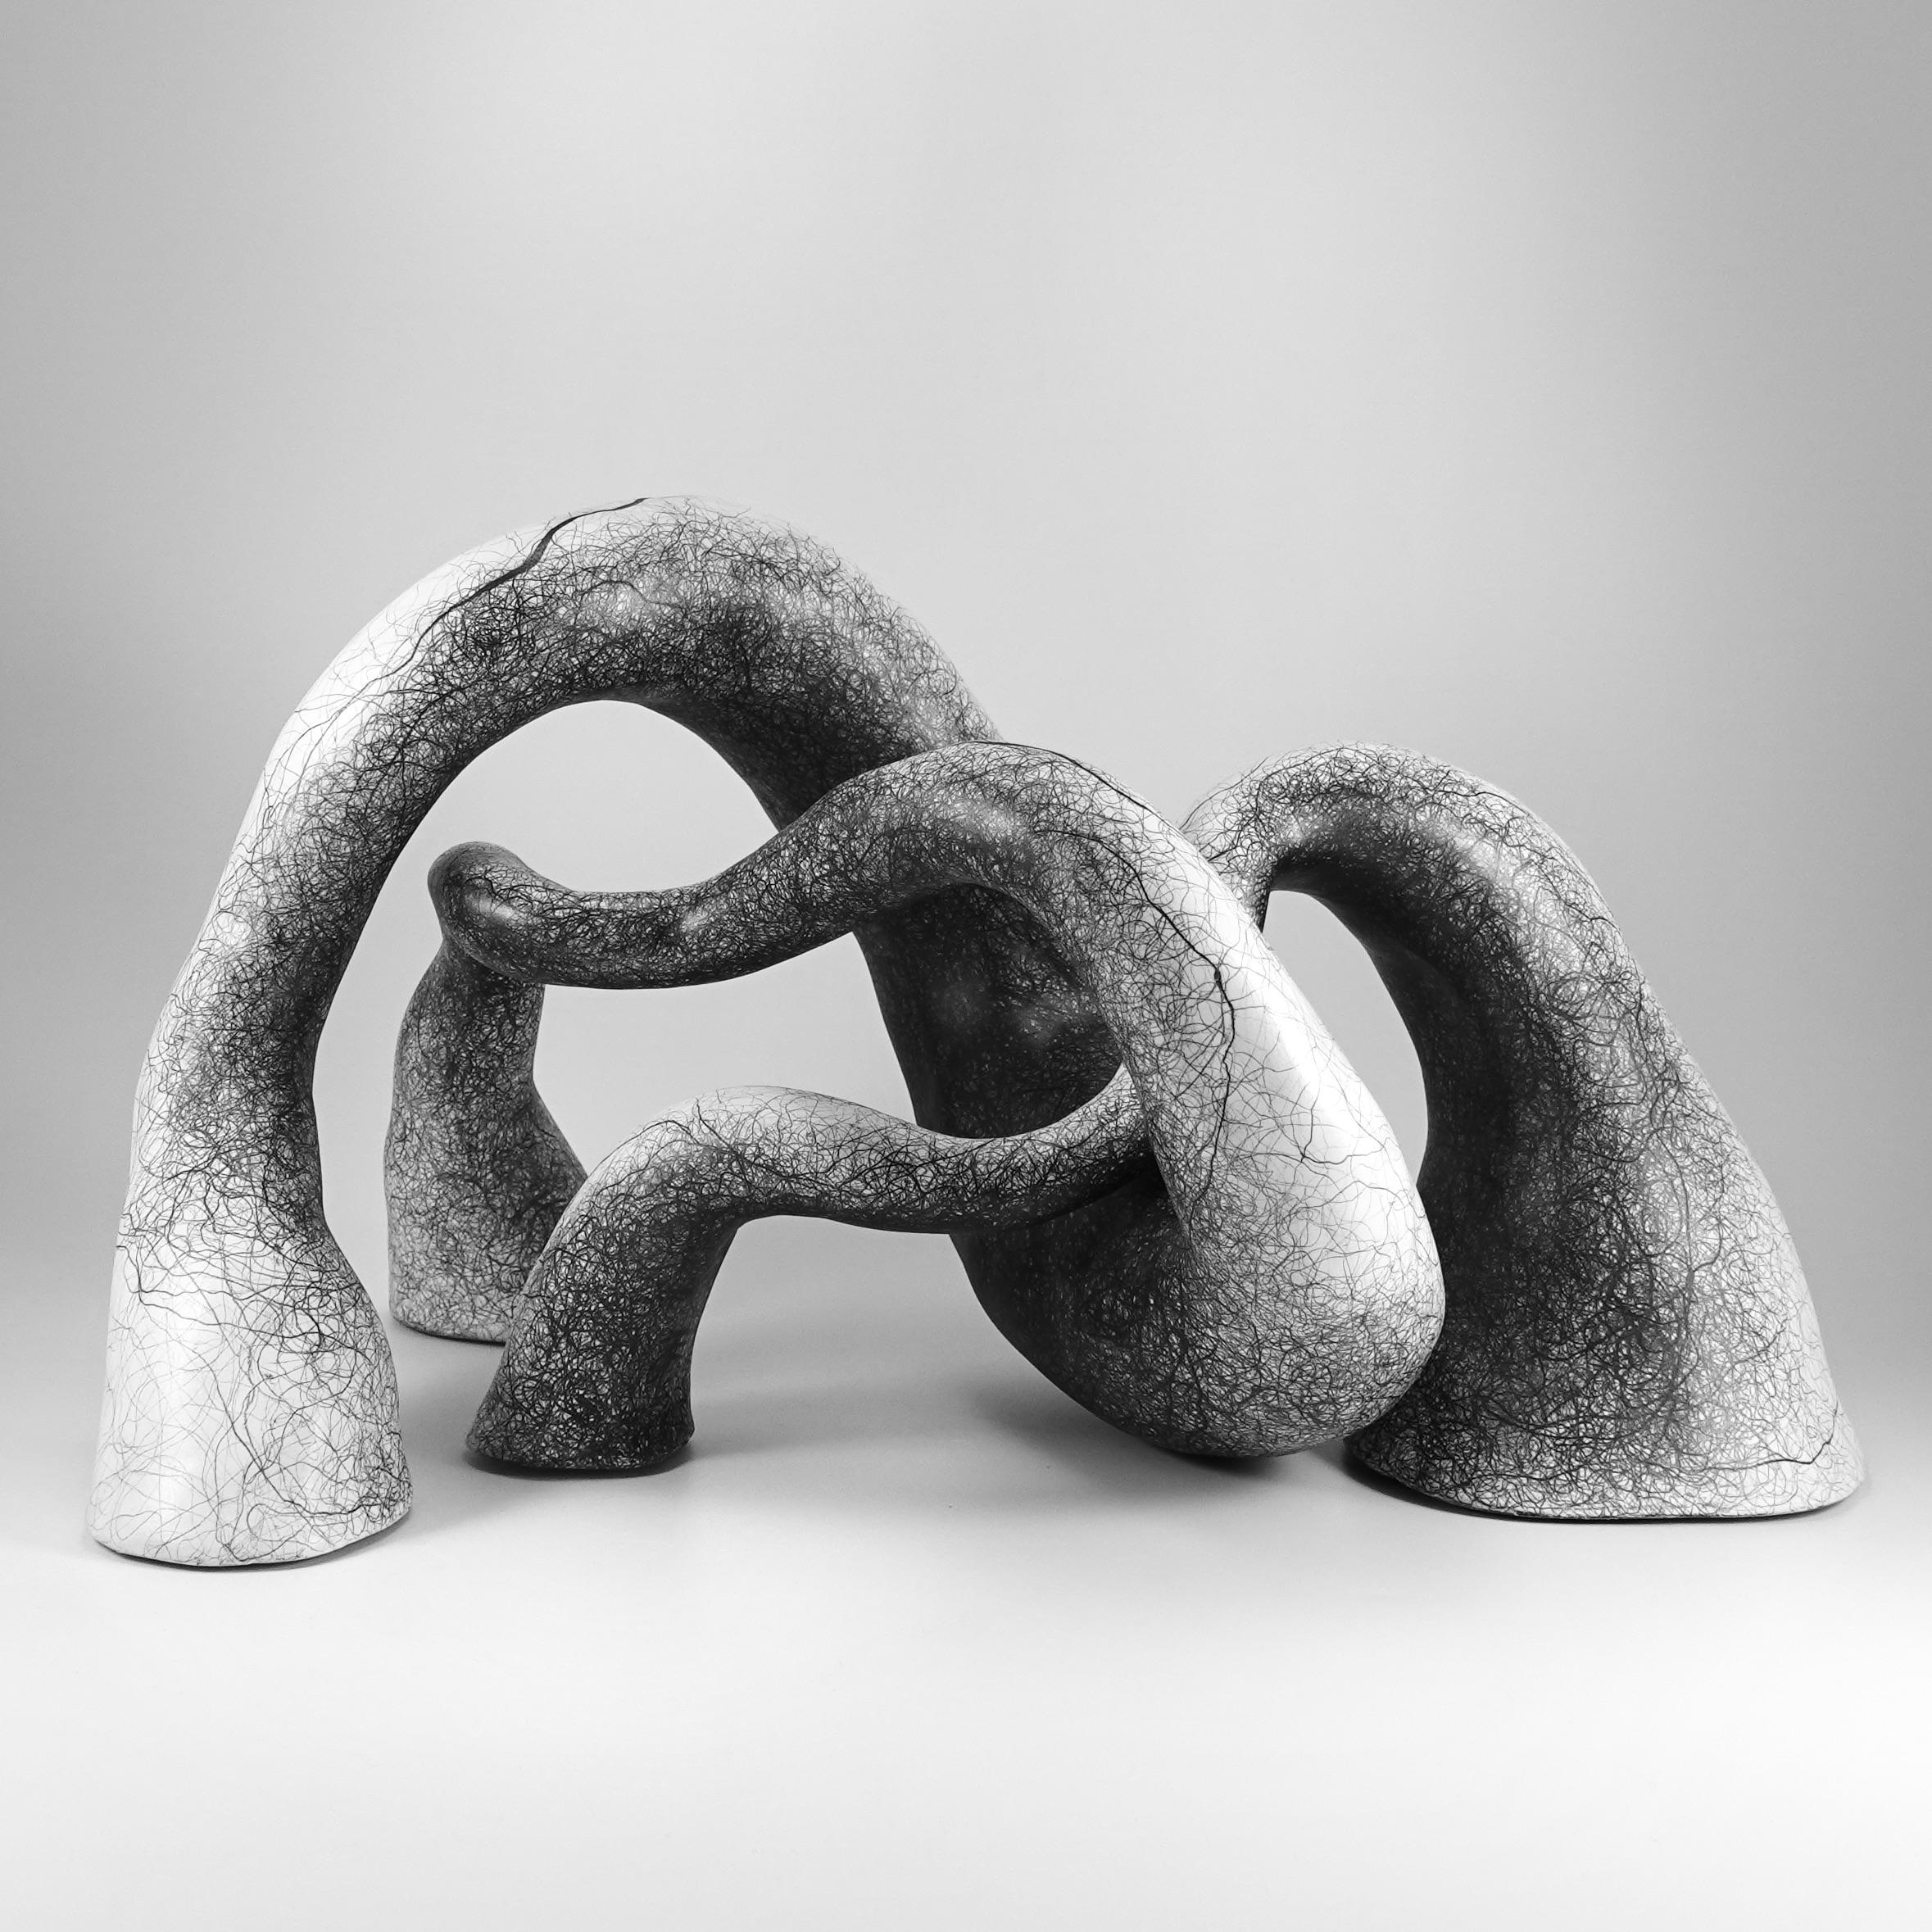 Abstract Sculpture Judi Tavill - Sculpture abstraite minimale en noir et blanc : "Couple".